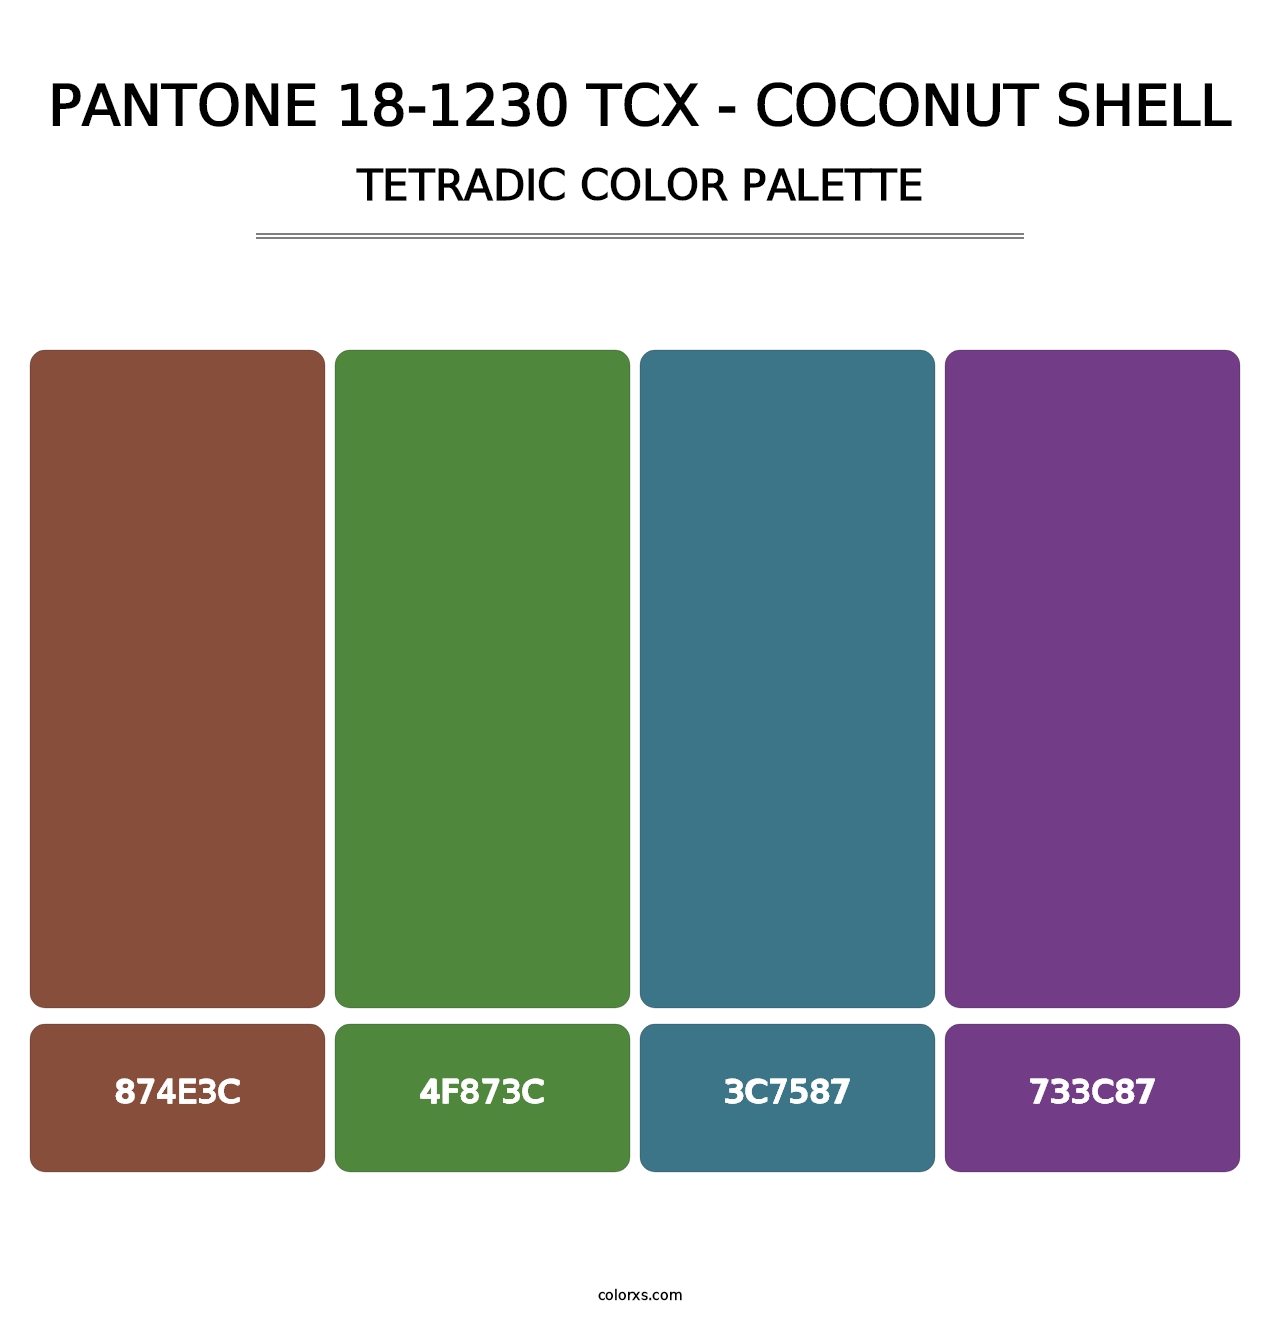 PANTONE 18-1230 TCX - Coconut Shell - Tetradic Color Palette